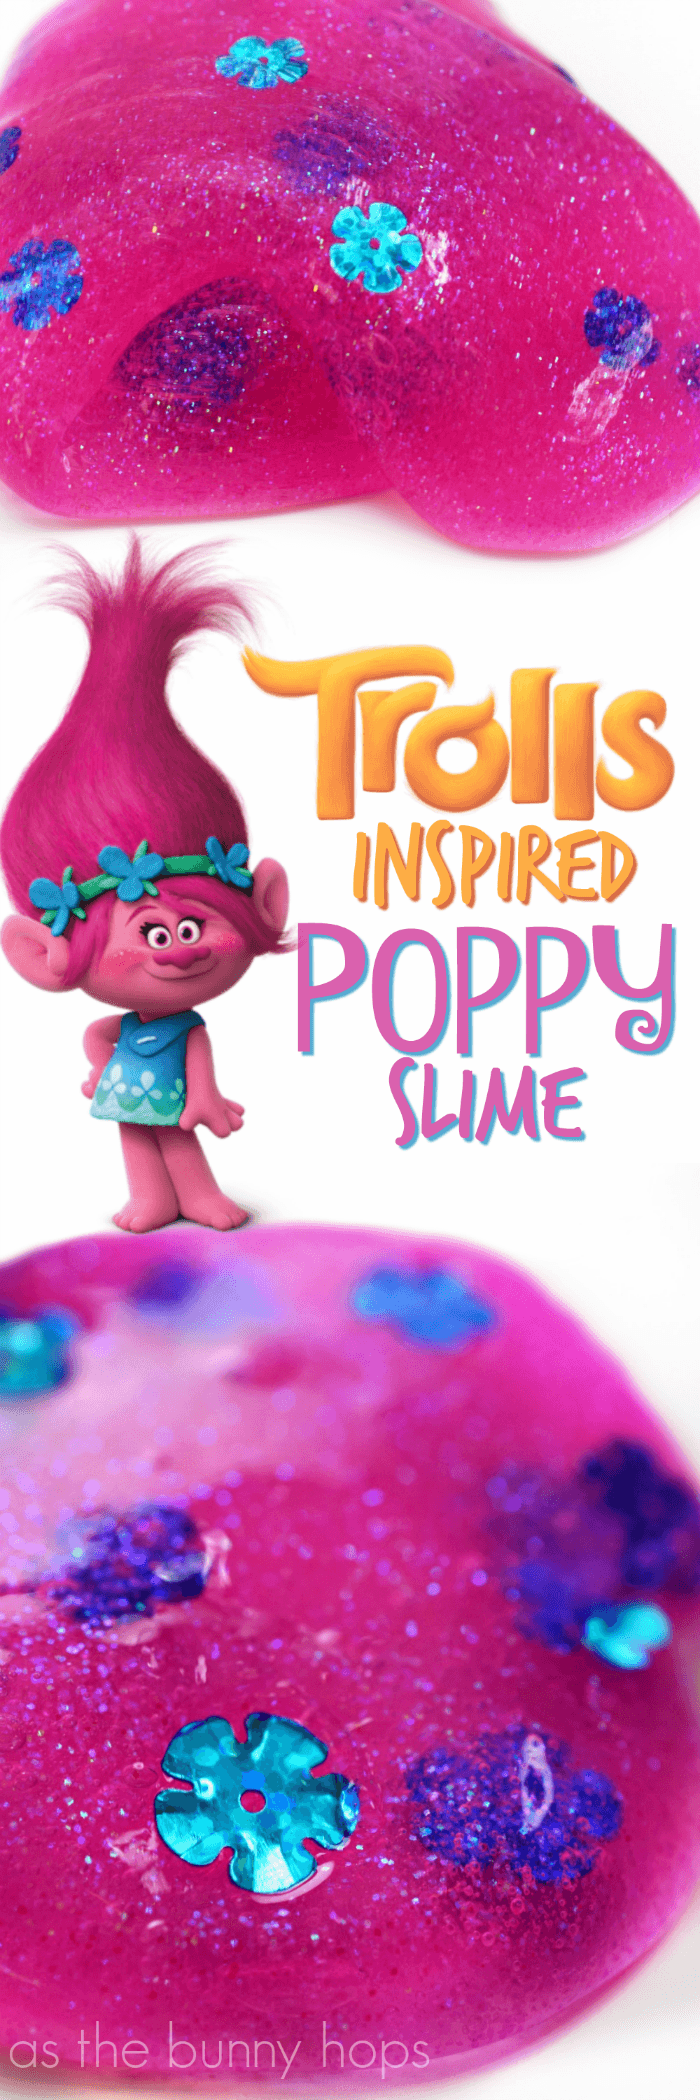 Poppy Slime Logo - Make yourself a batch of hot pink, glittery, Trolls-inspired Poppy ...